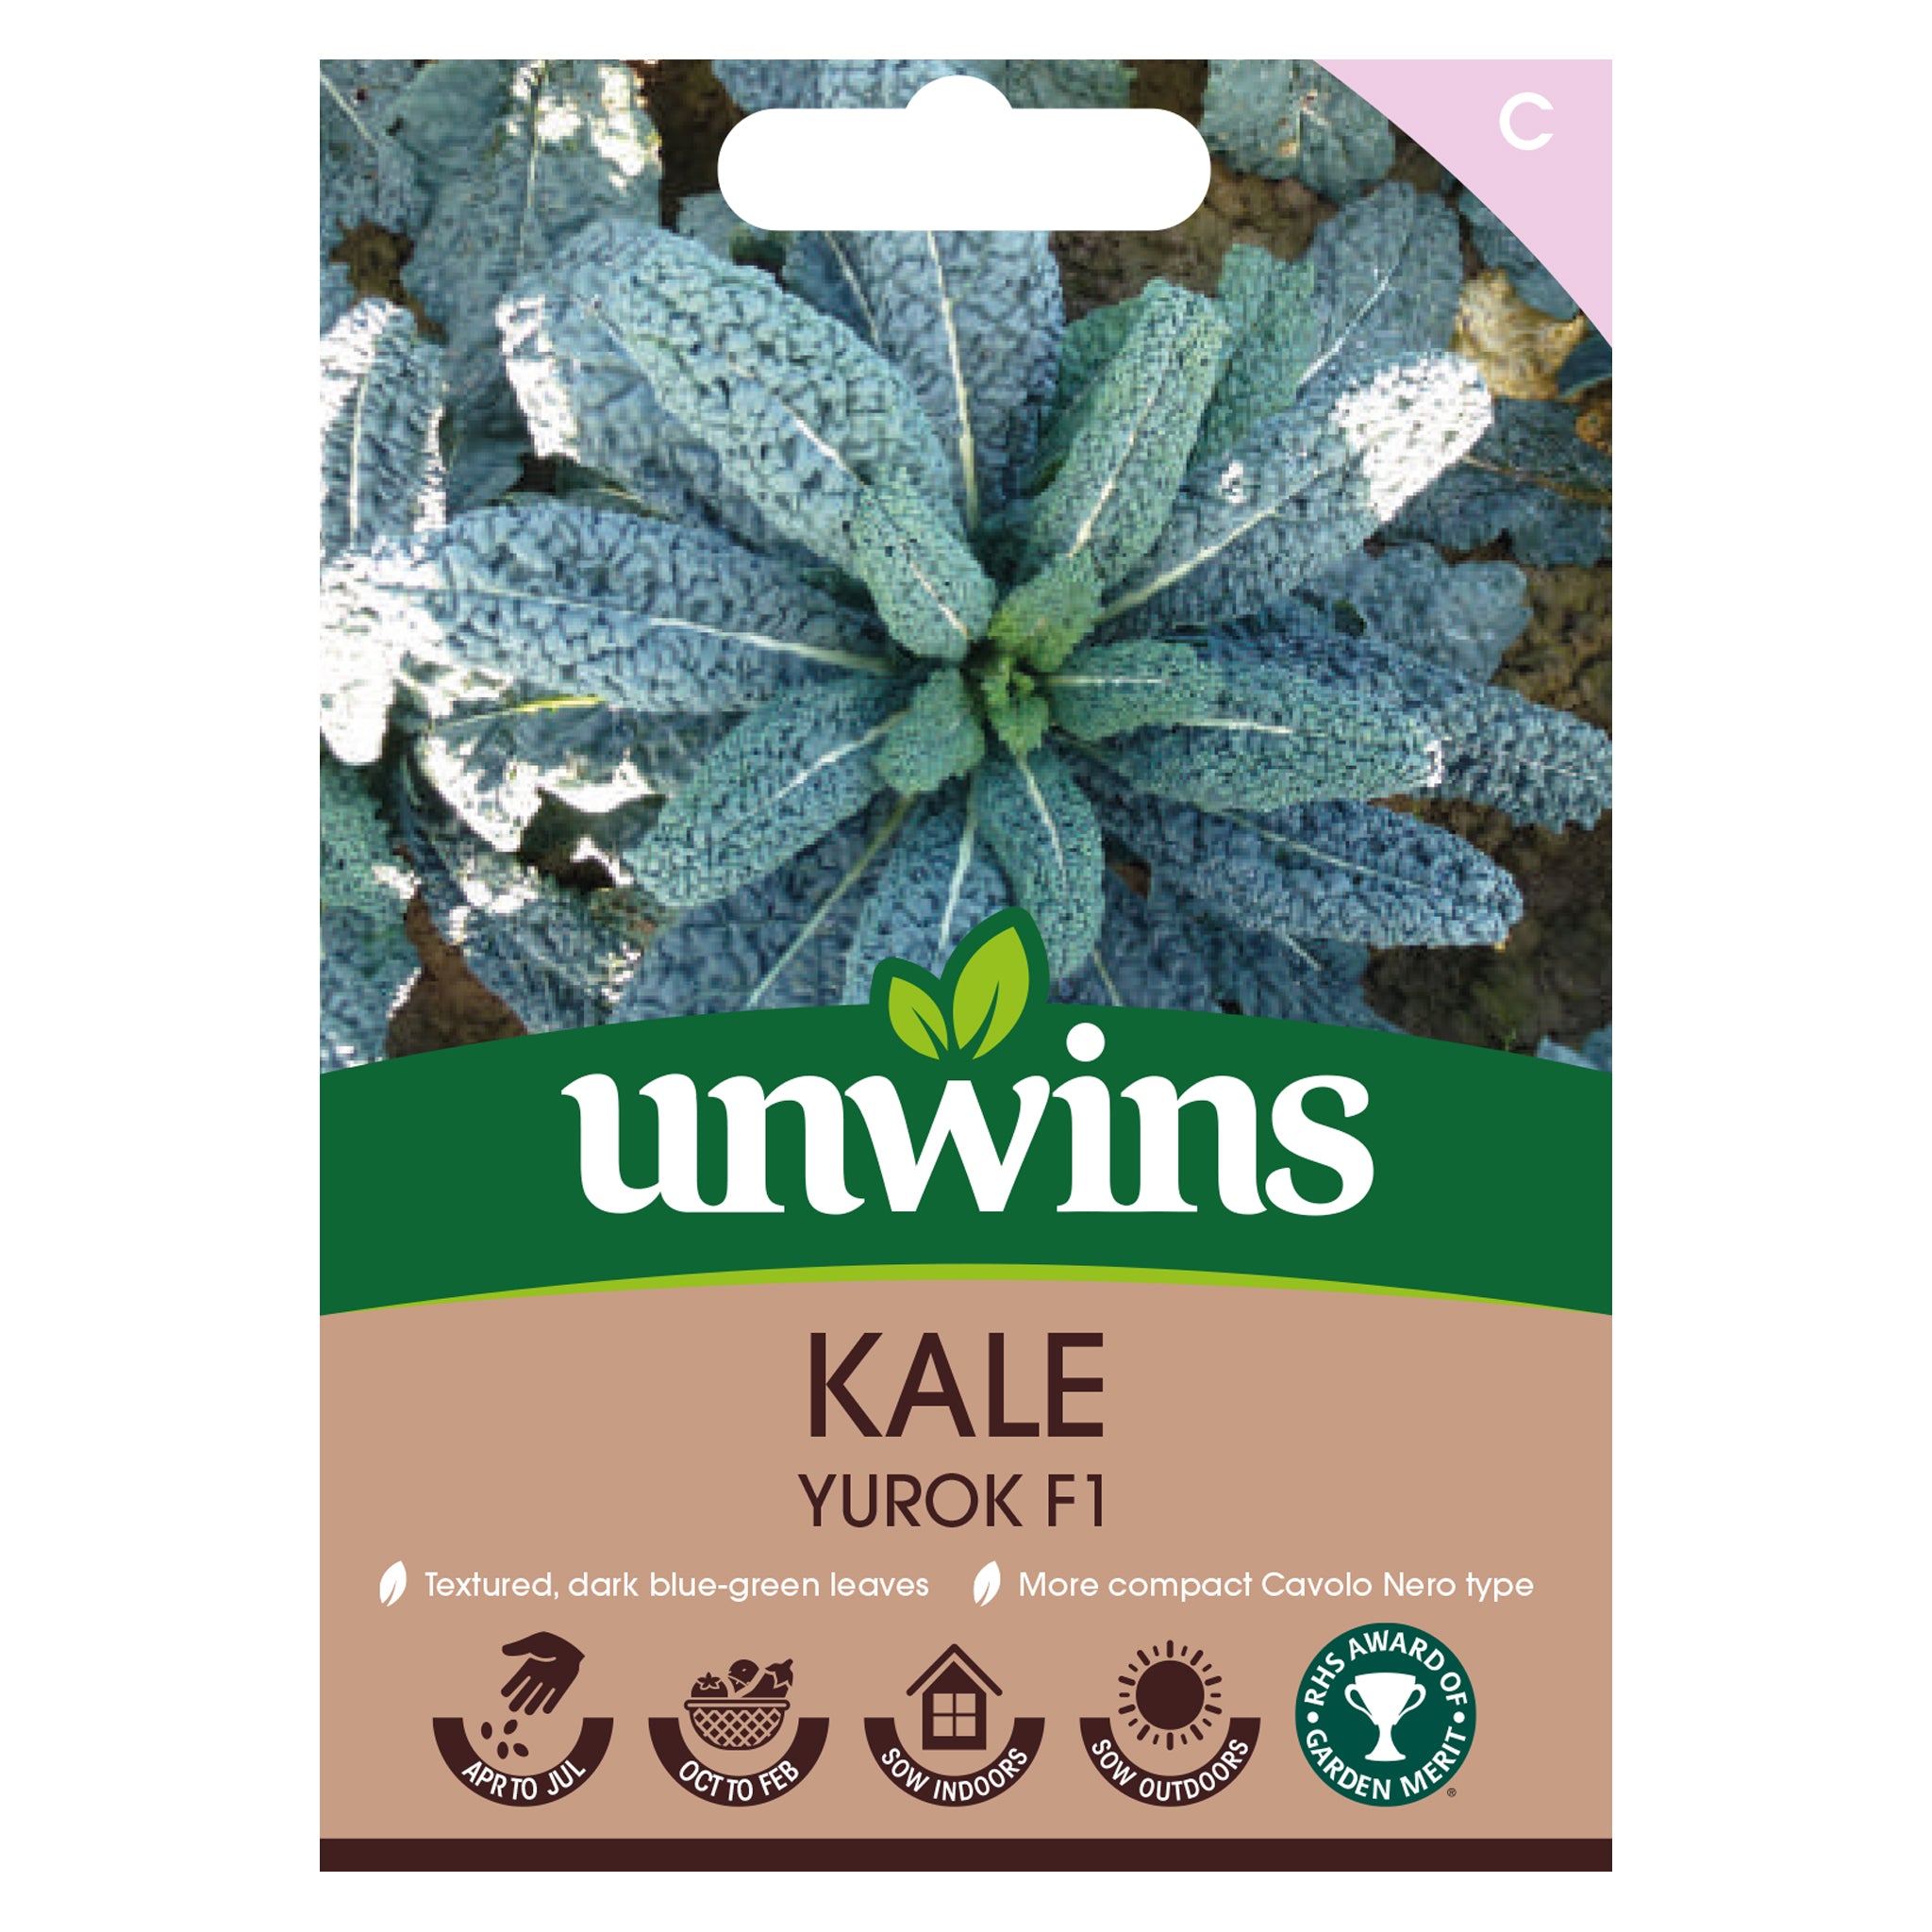 Unwins Kale Yurok F1 Seeds